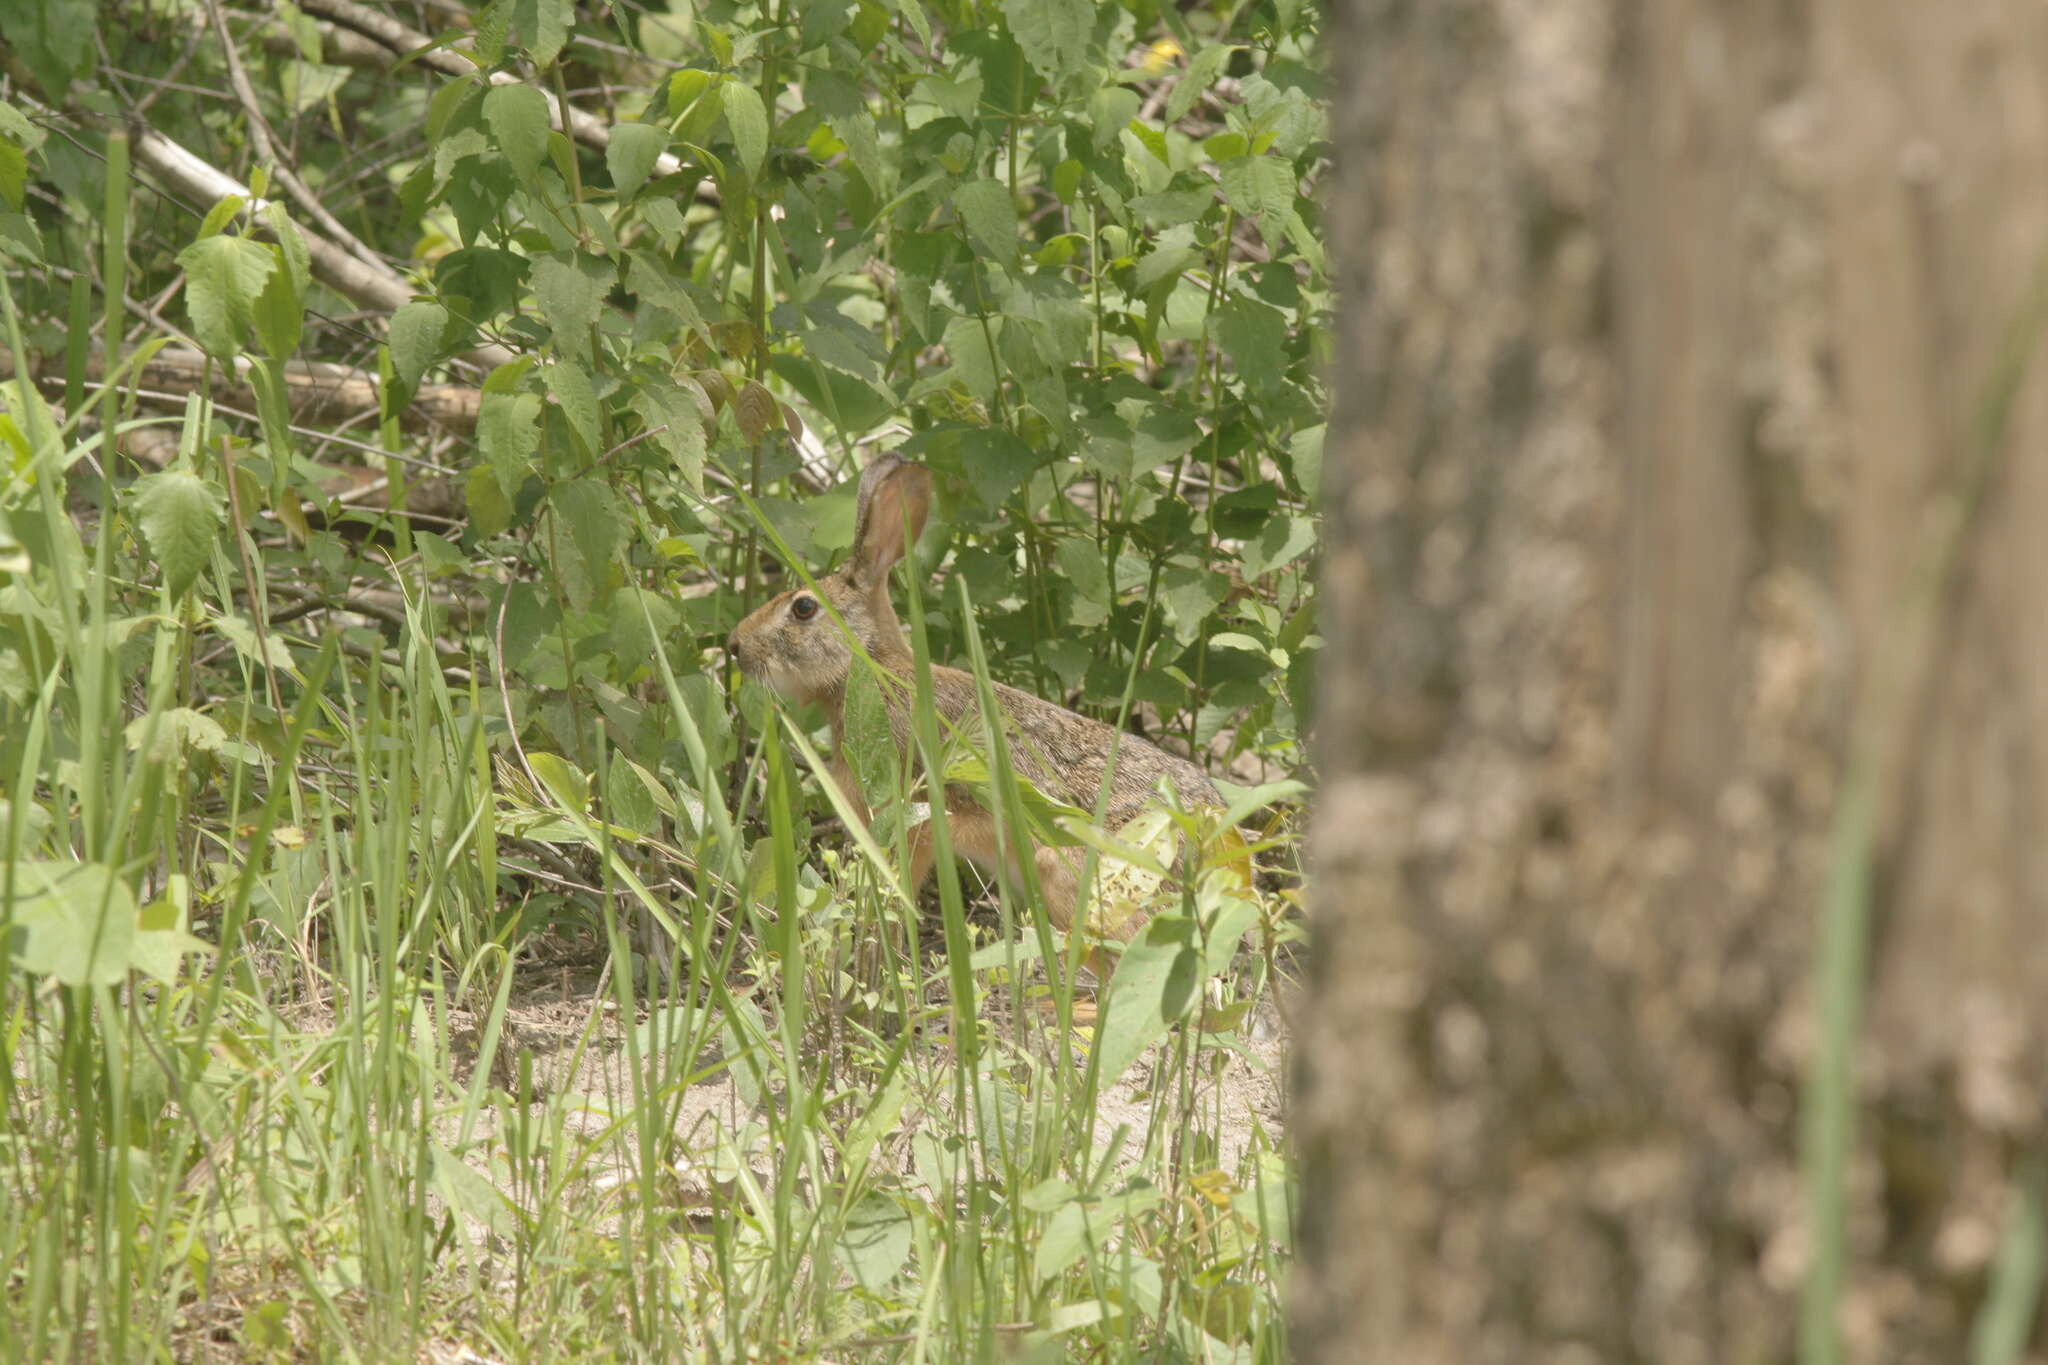 Image of Burmese Hare